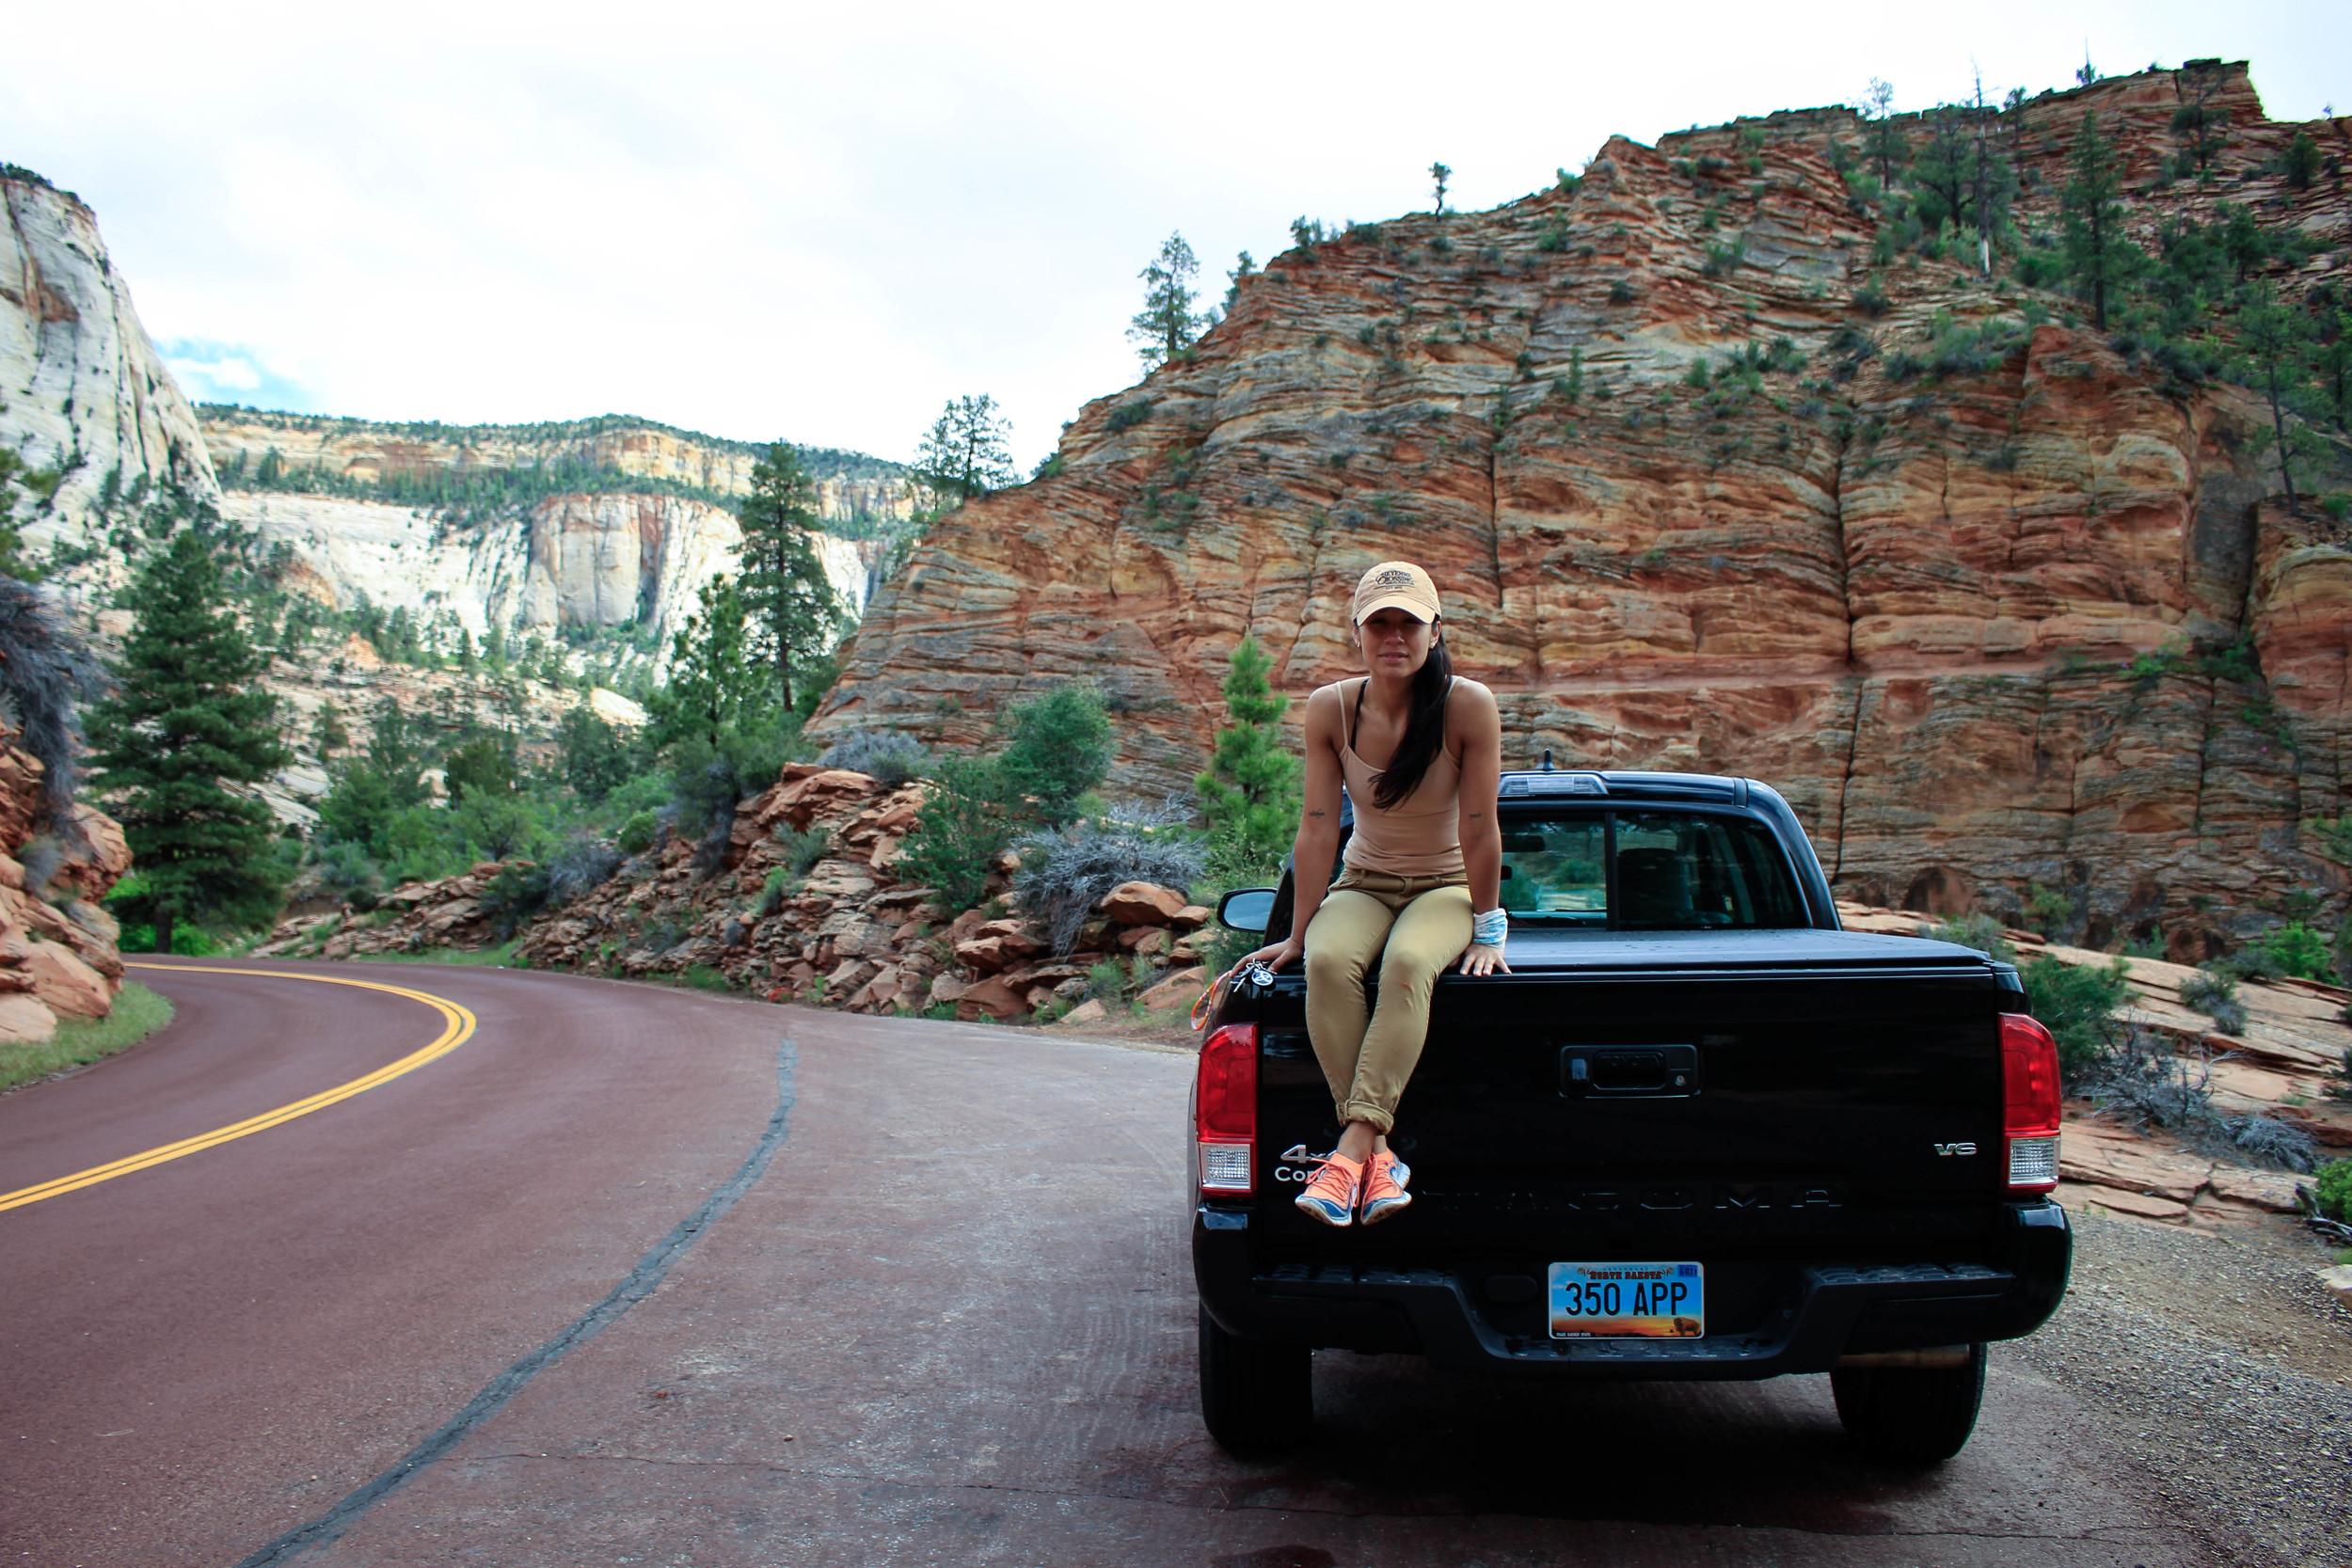  I love my truck!&nbsp;Zion National Park, Utah.&nbsp; 